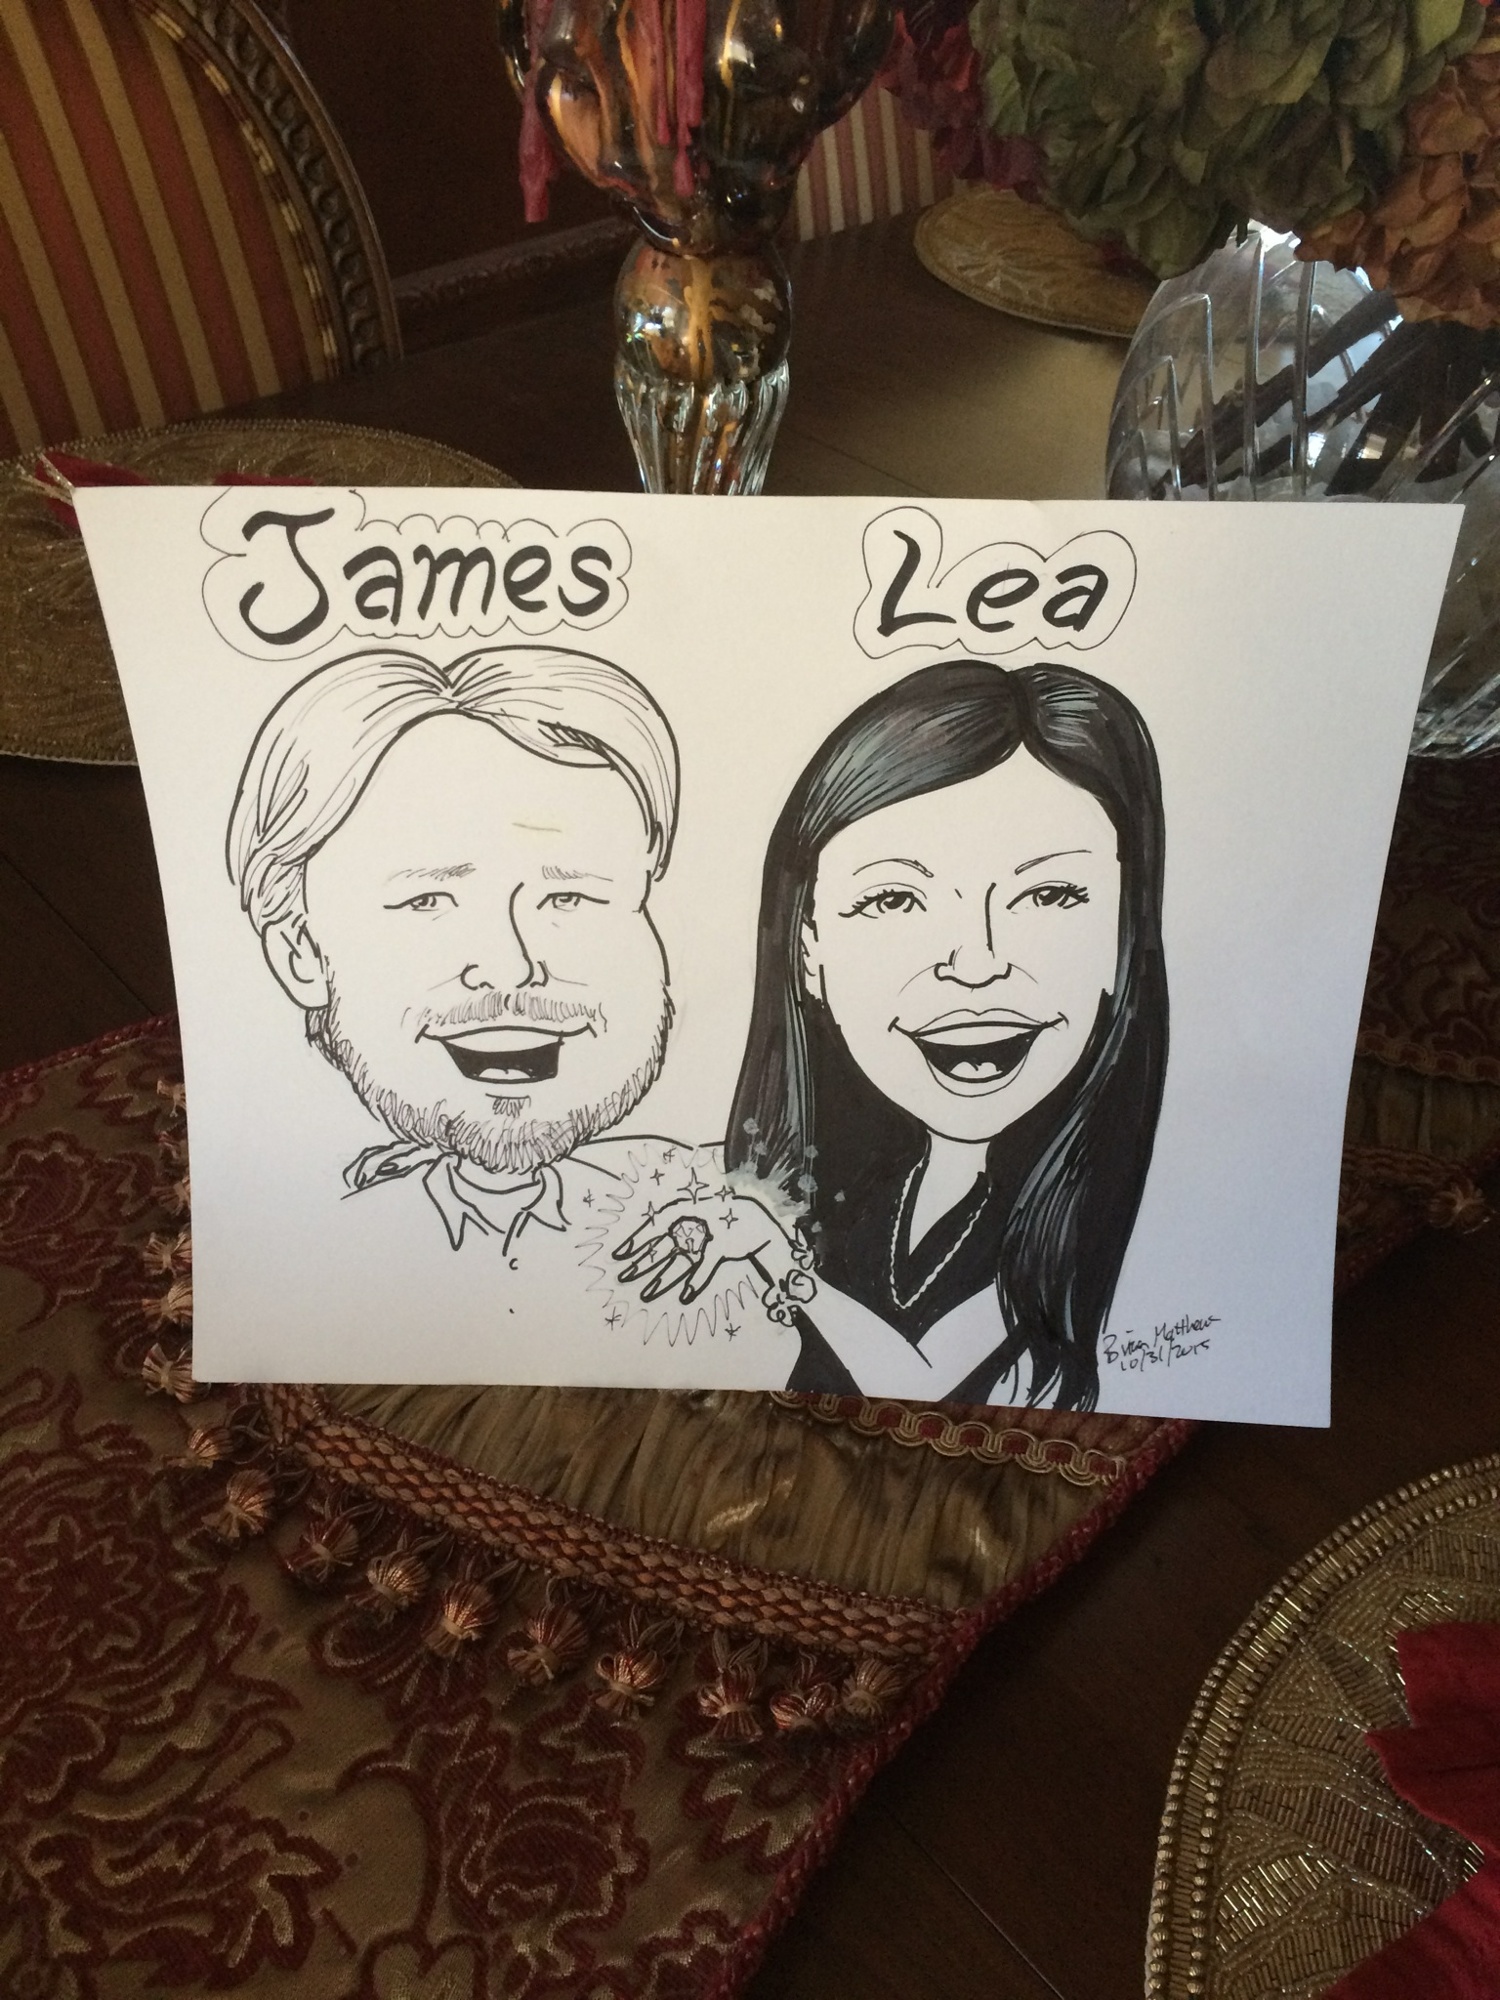 James Buchanan and Lea Mei's engagement cartoon.